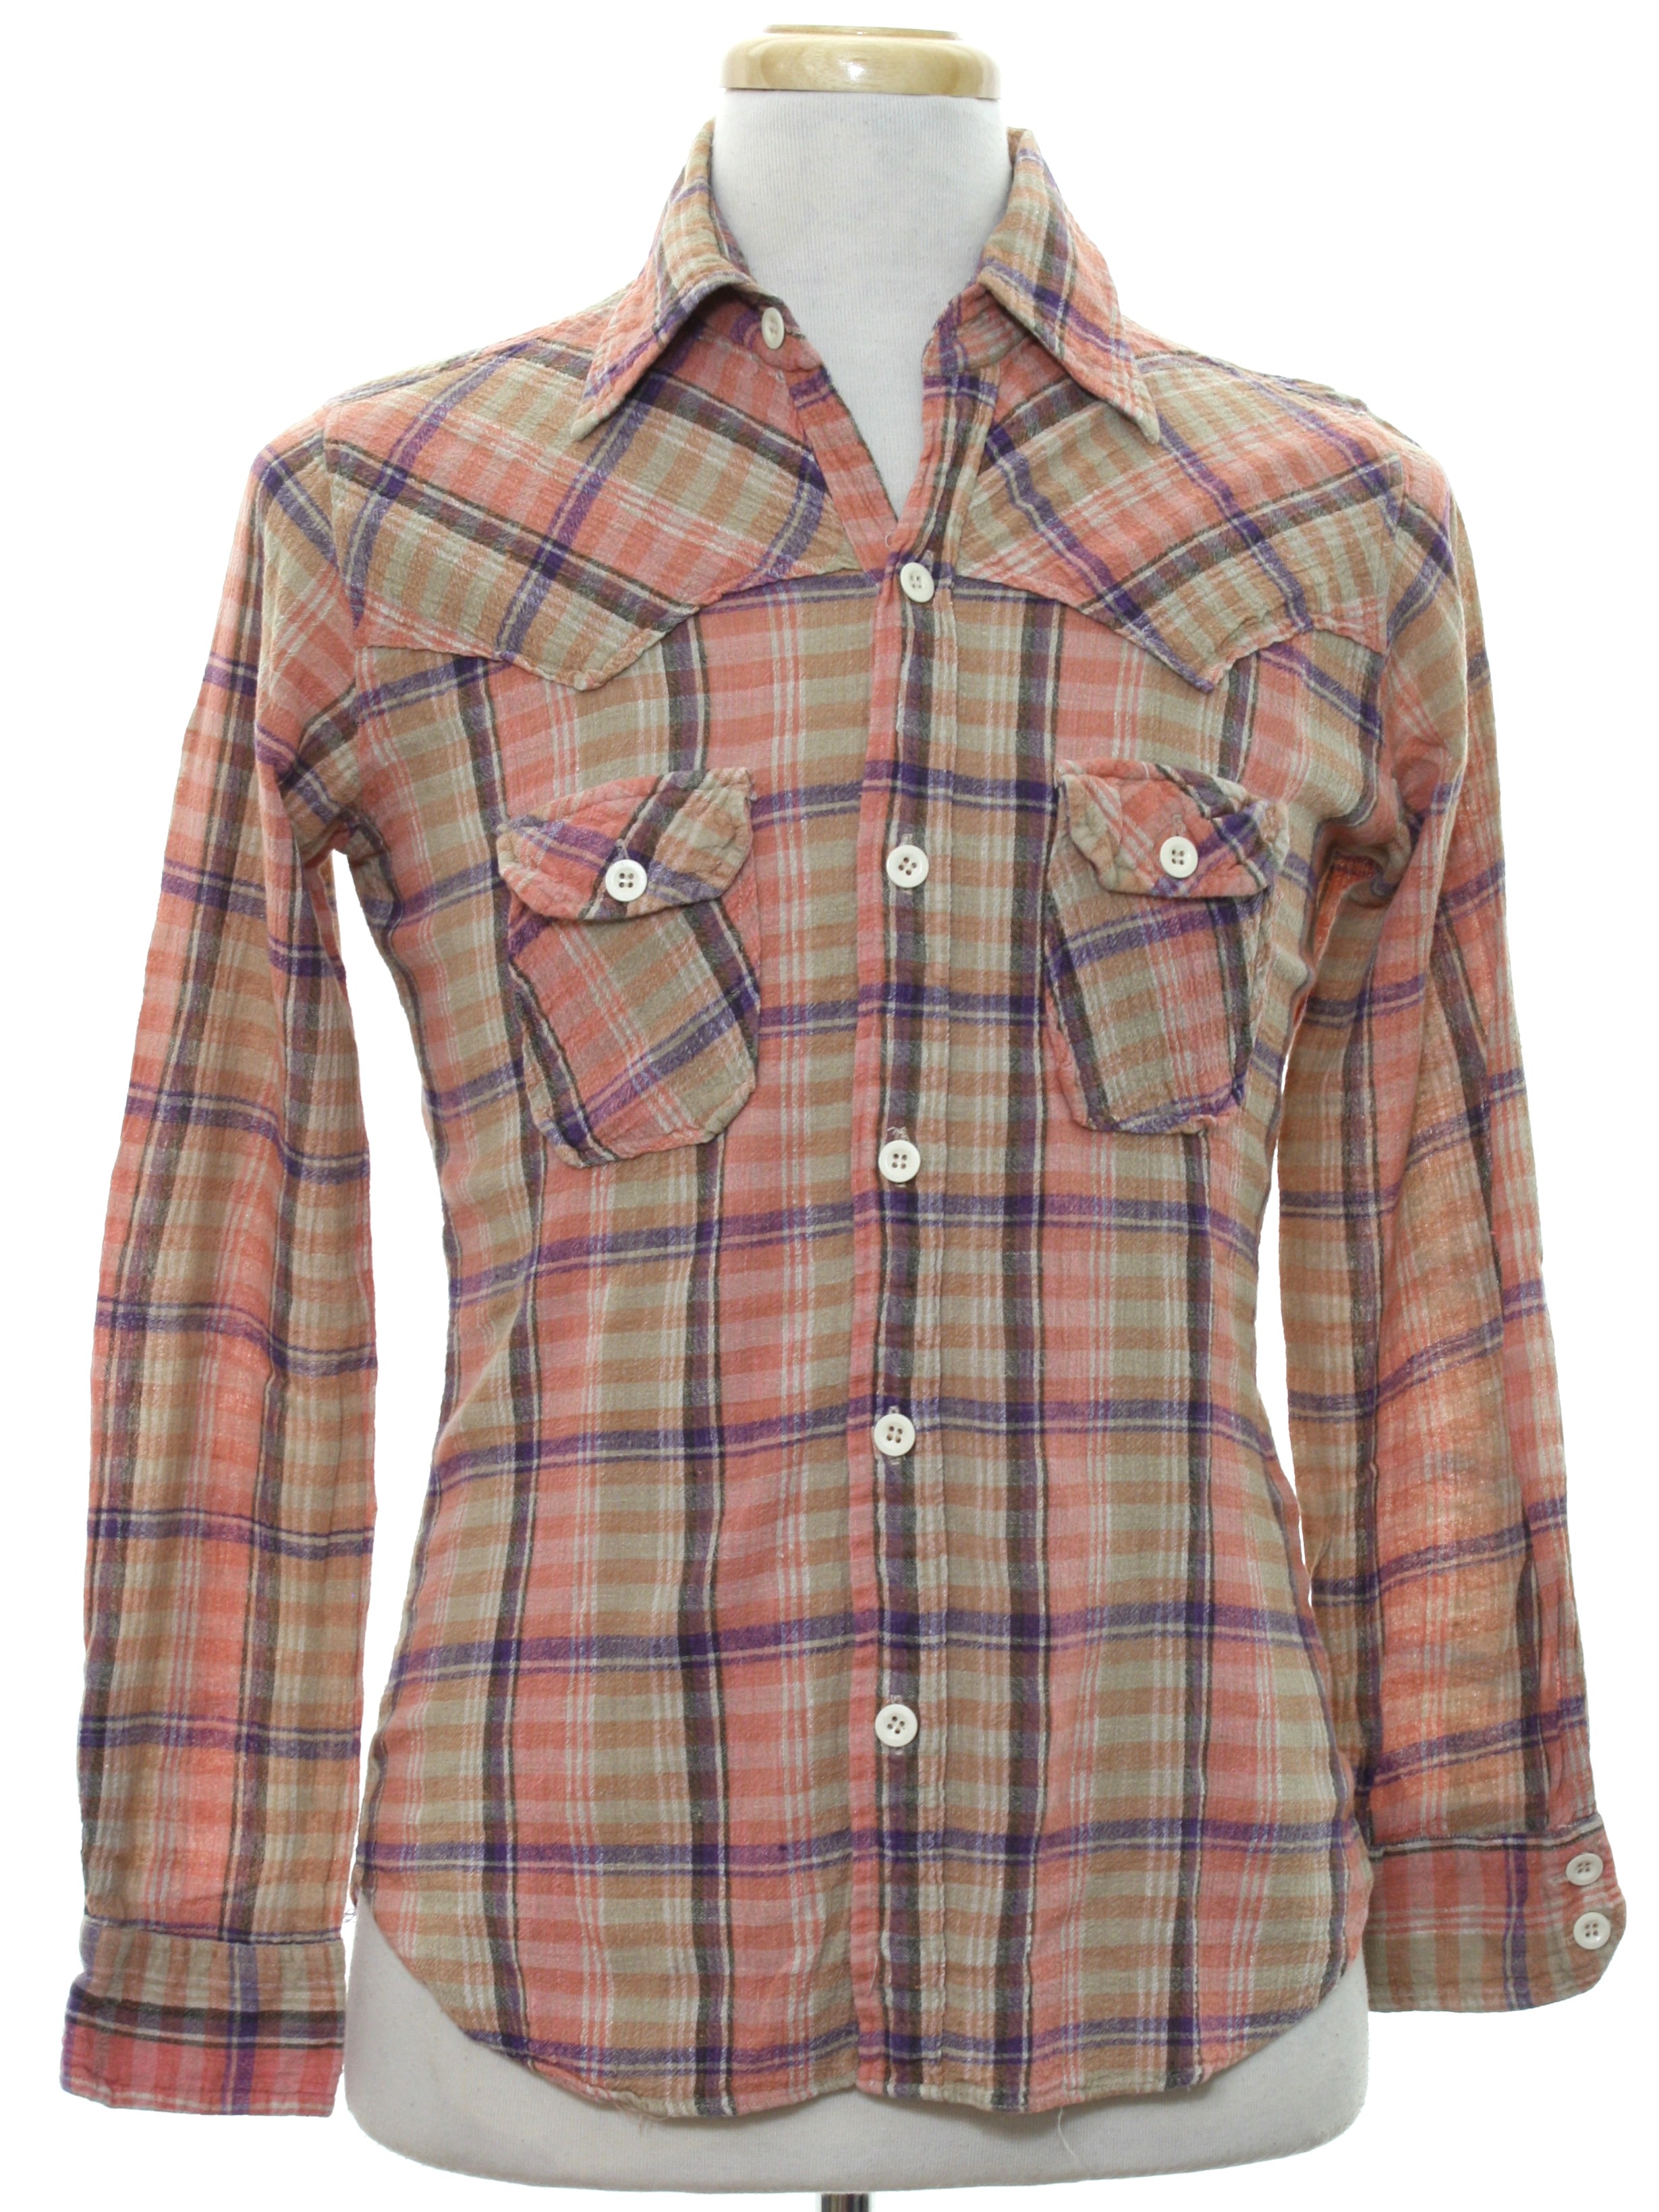 Retro 90s Western Shirt (Atkinson) : 90s or Newer -Atkinson- Mens ...